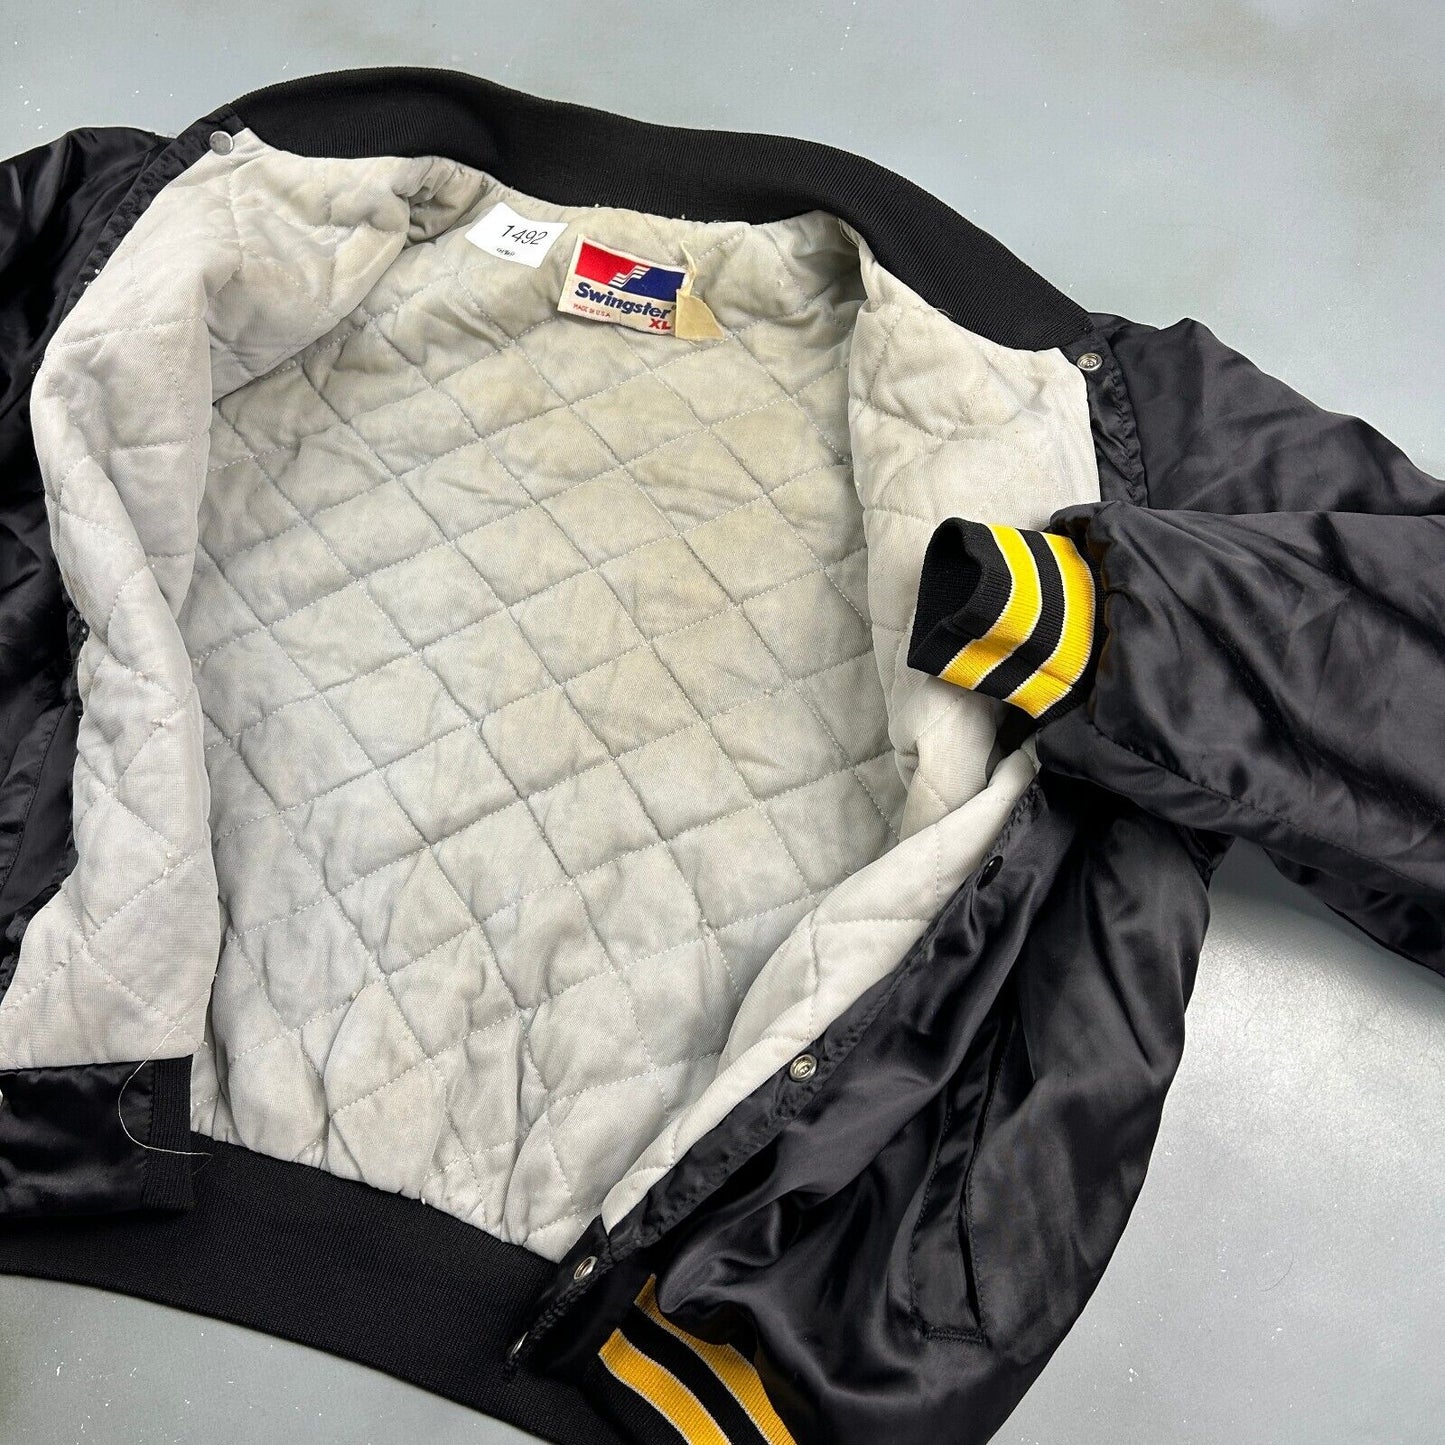 VINTAGE 90s Pittsburgh Penguins Swingster Button Snap Jacket sz XL Adult Men